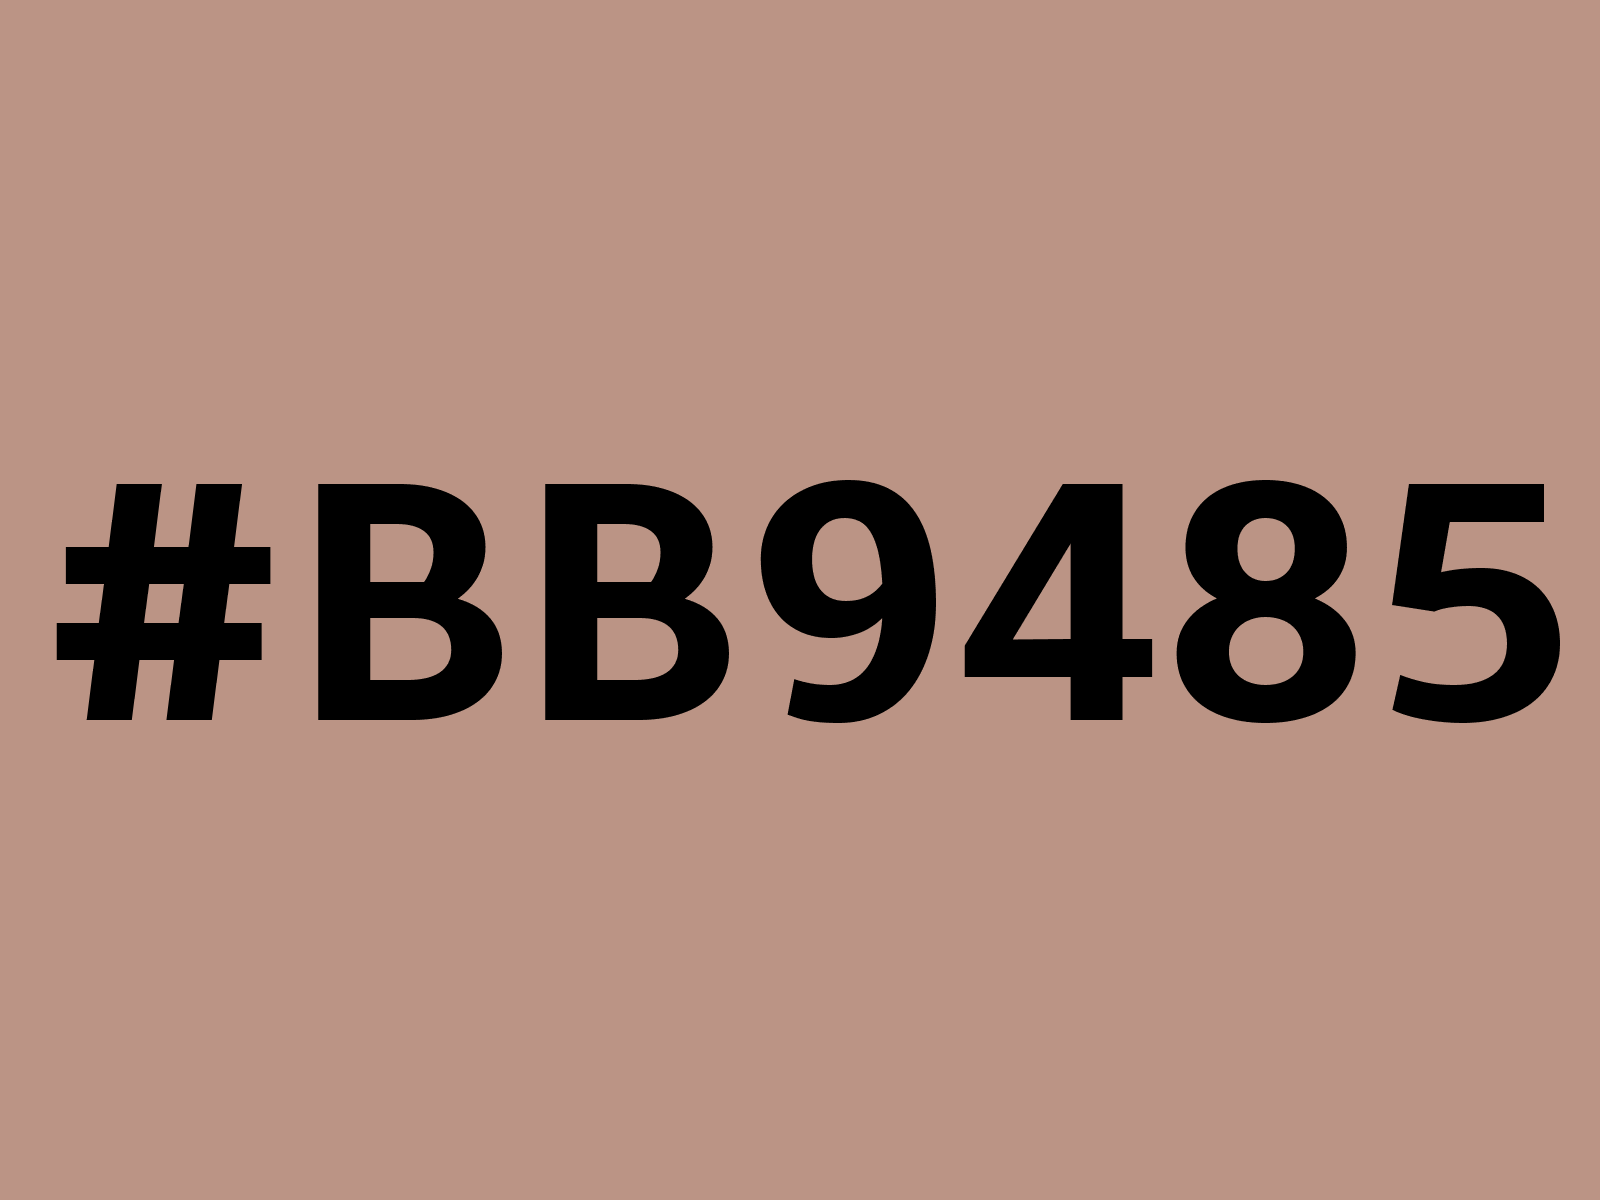 bb9485